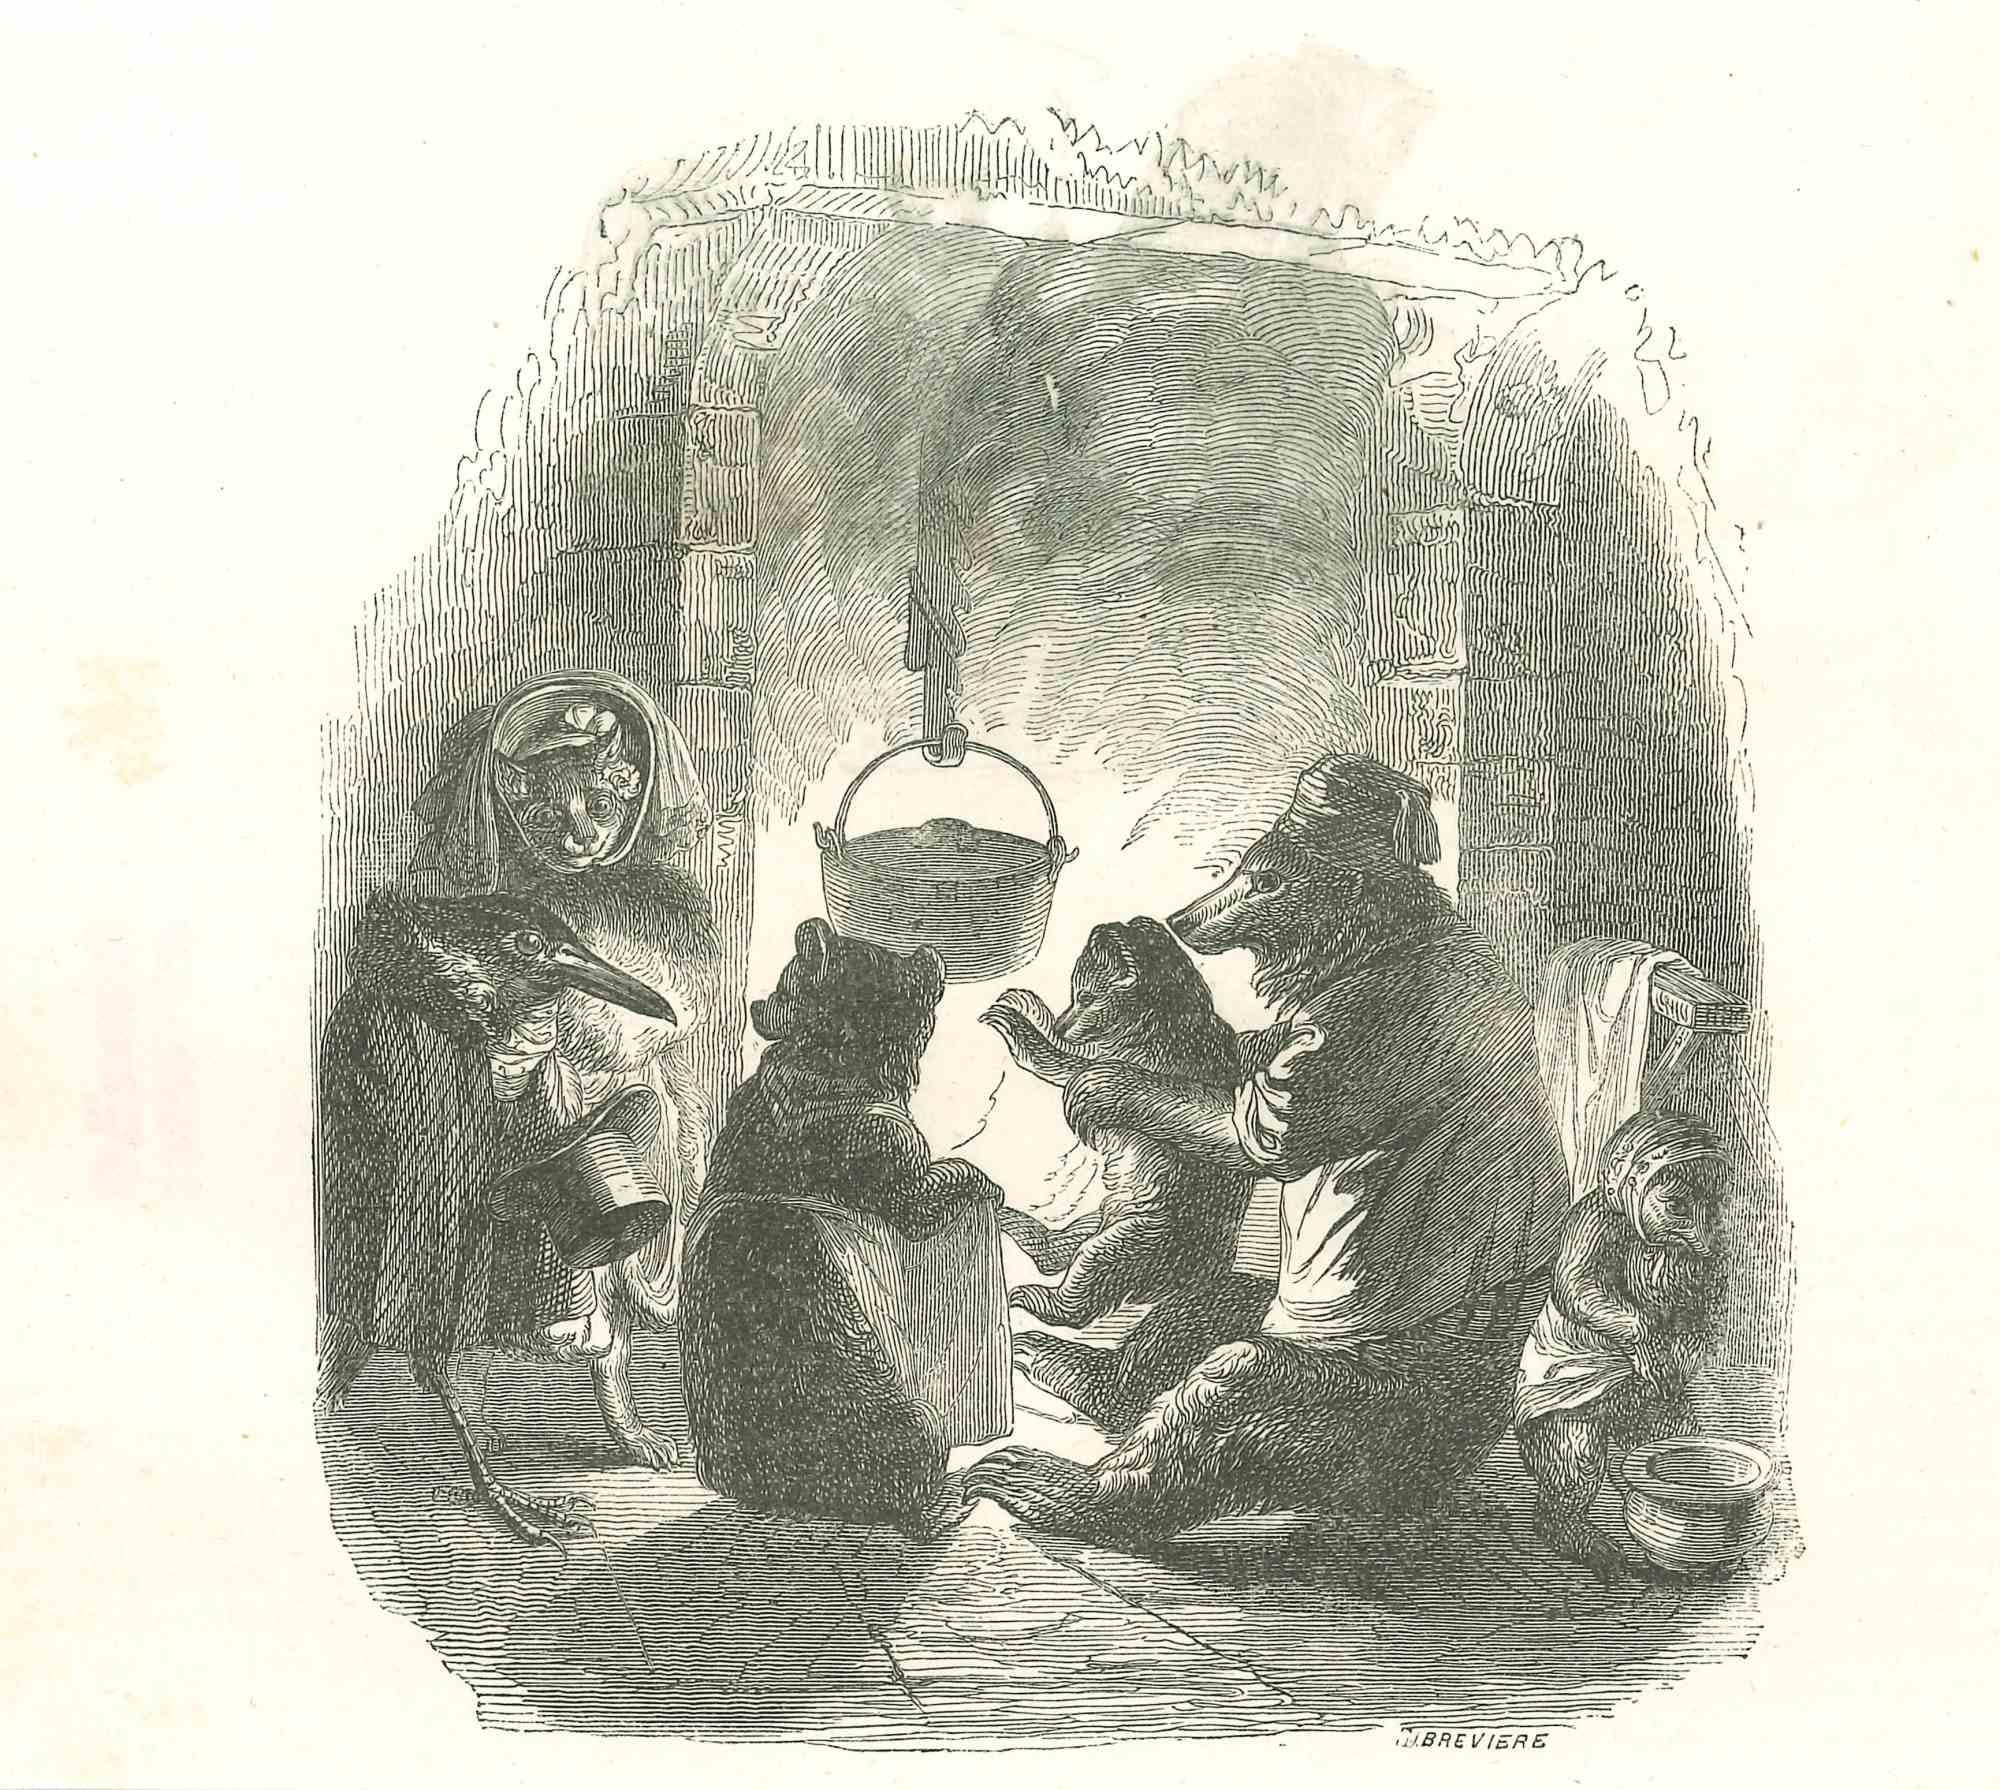 Warming Up - Original Lithograph by J.J Grandville - 1852